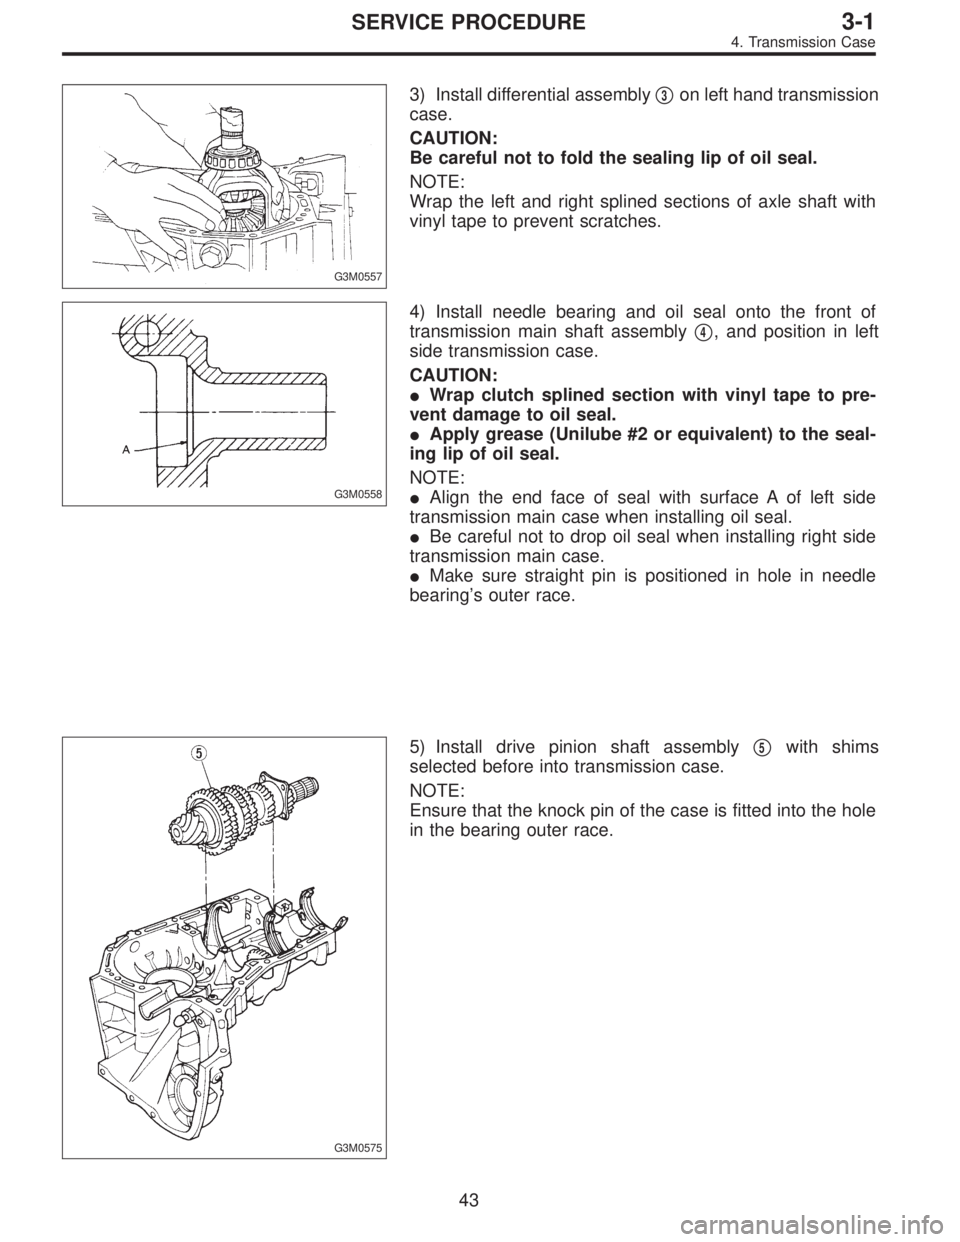 SUBARU LEGACY 1995  Service Repair Manual G3M0557
3) Install differential assembly3on left hand transmission
case.
CAUTION:
Be careful not to fold the sealing lip of oil seal.
NOTE:
Wrap the left and right splined sections of axle shaft with